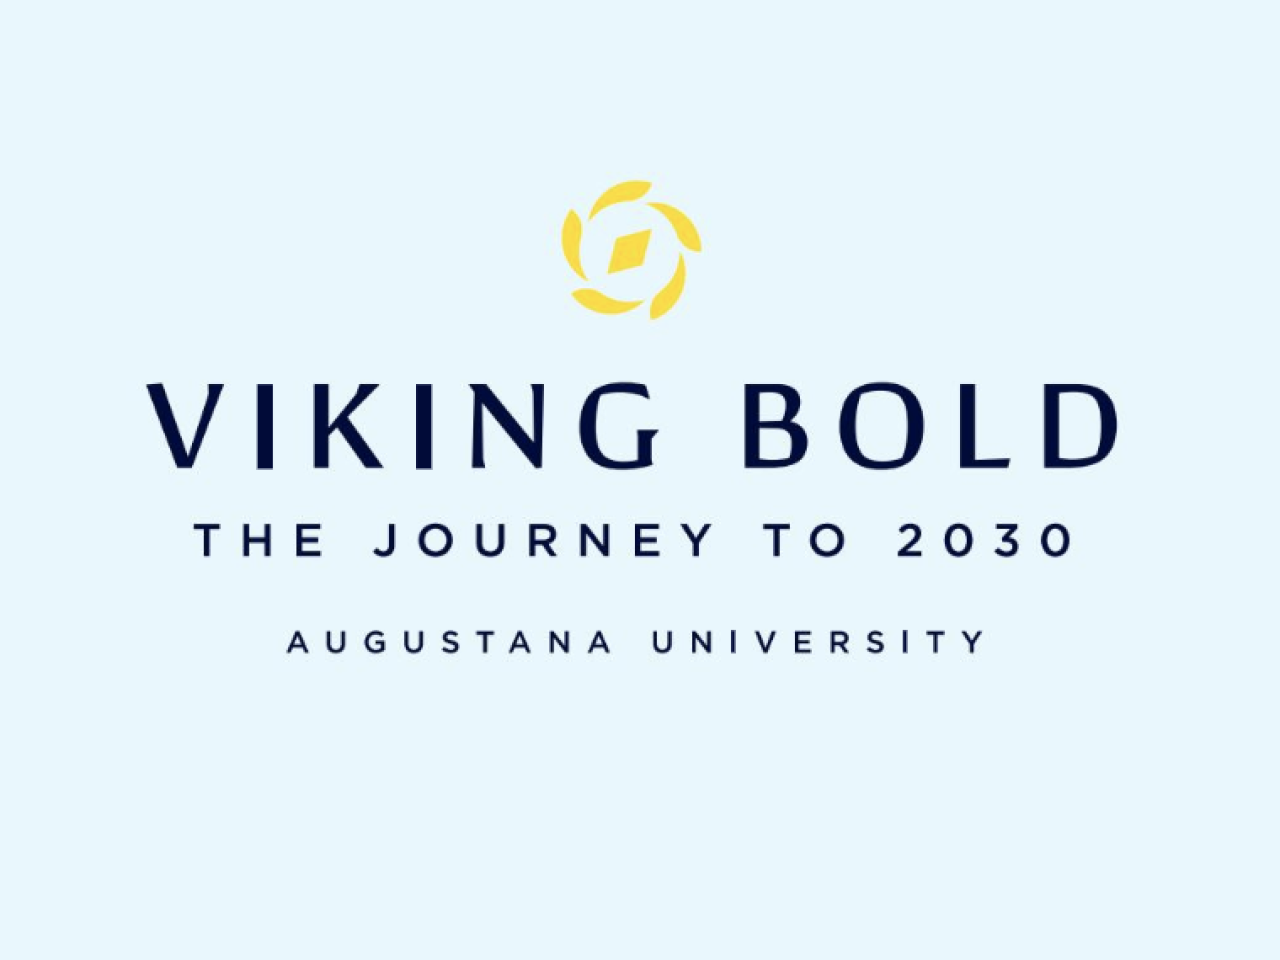 Viking Bold 2030